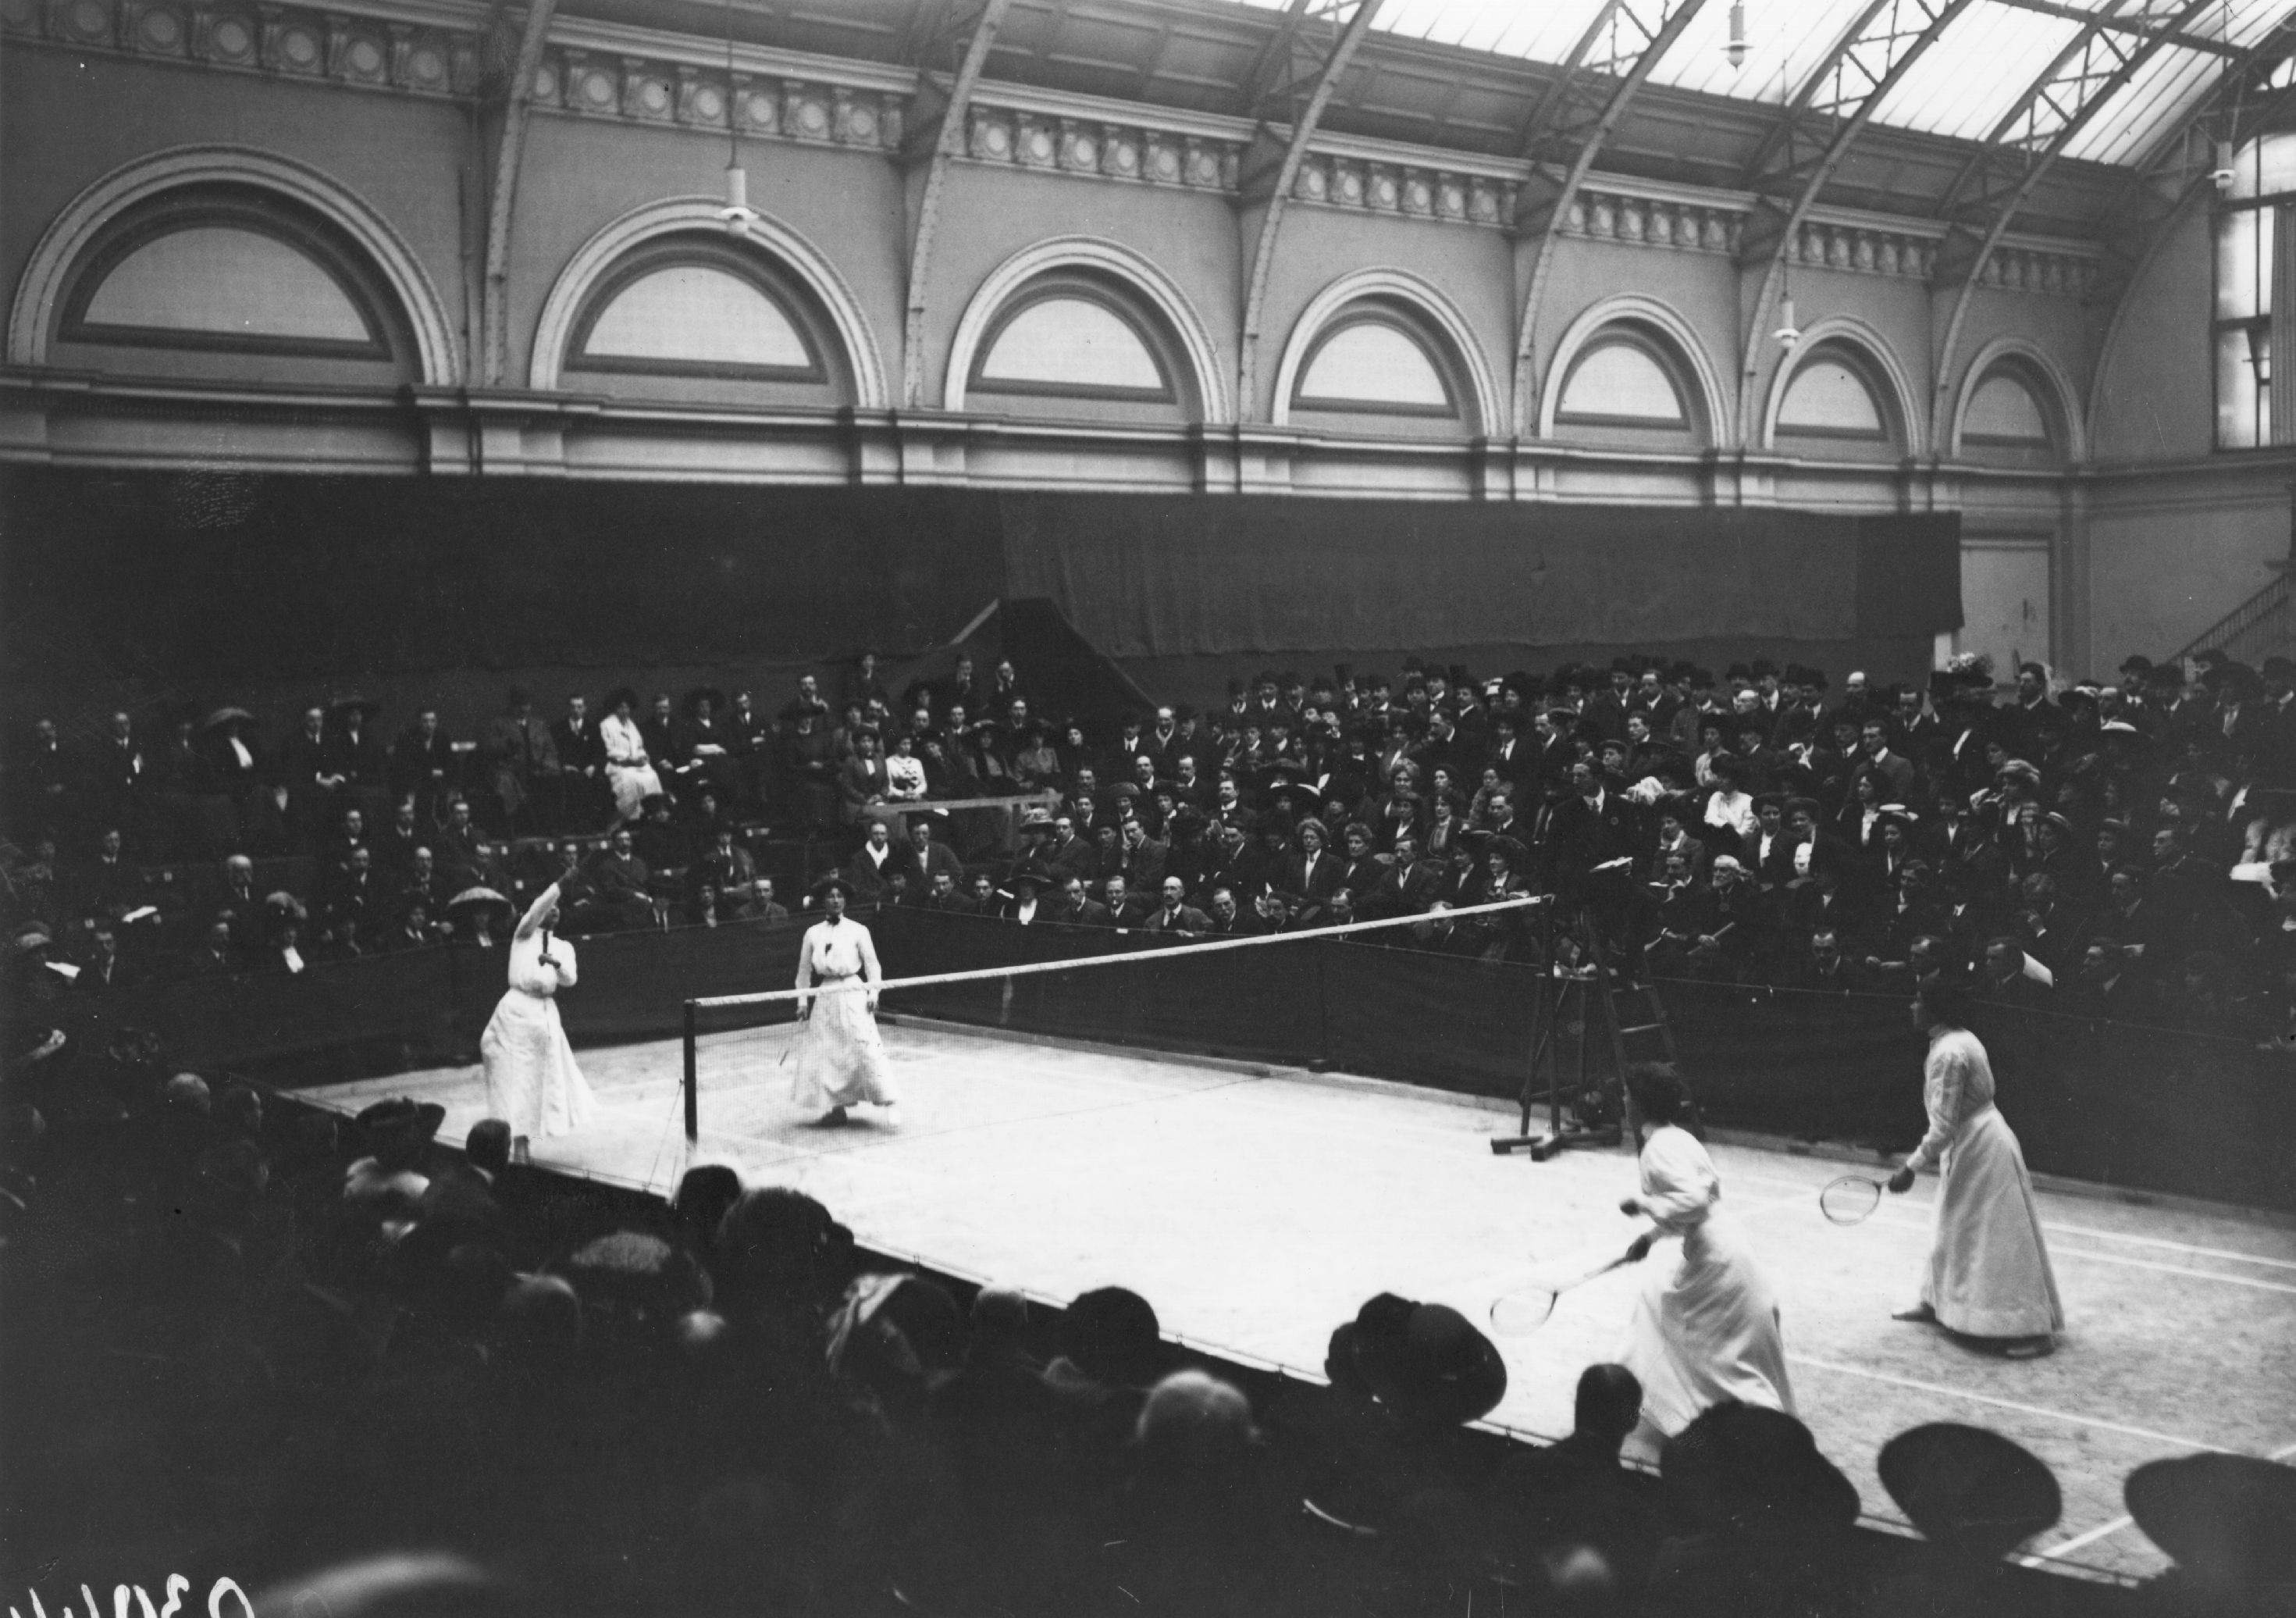 Badminton History